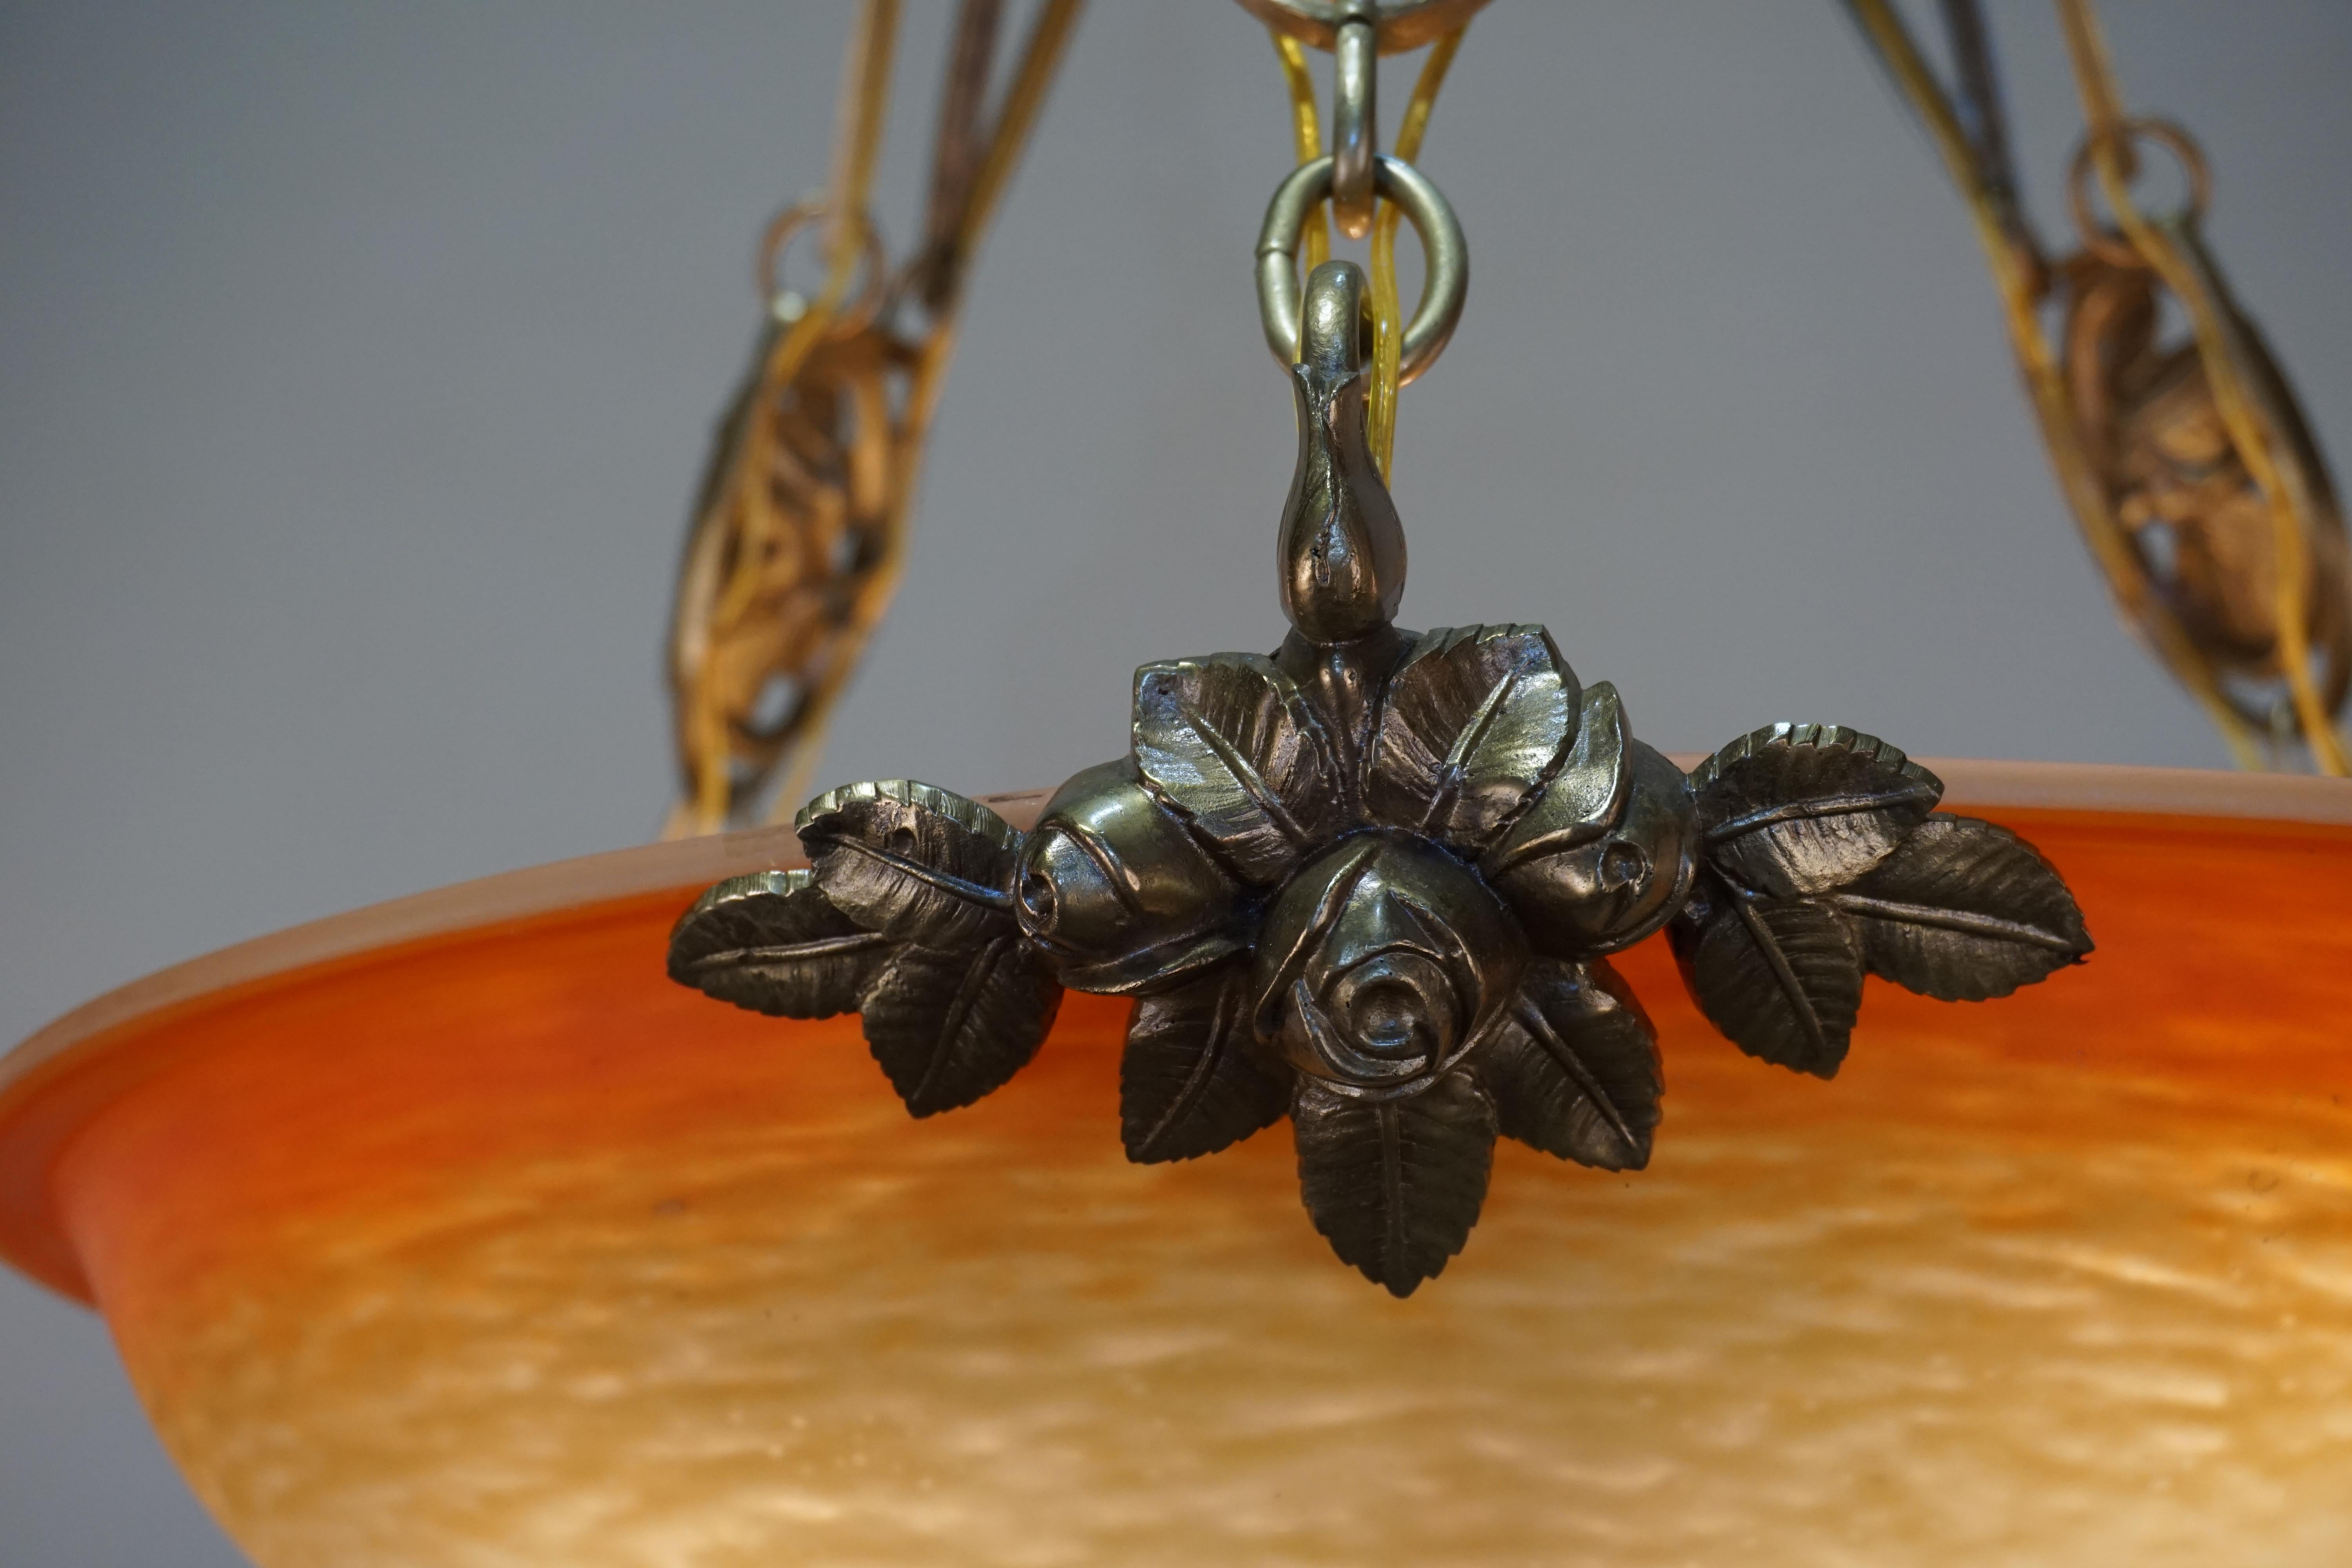 Blown glass chandelier with bronze mounting by Charles Schneider.
Total of nine lights, 60 watt max each.